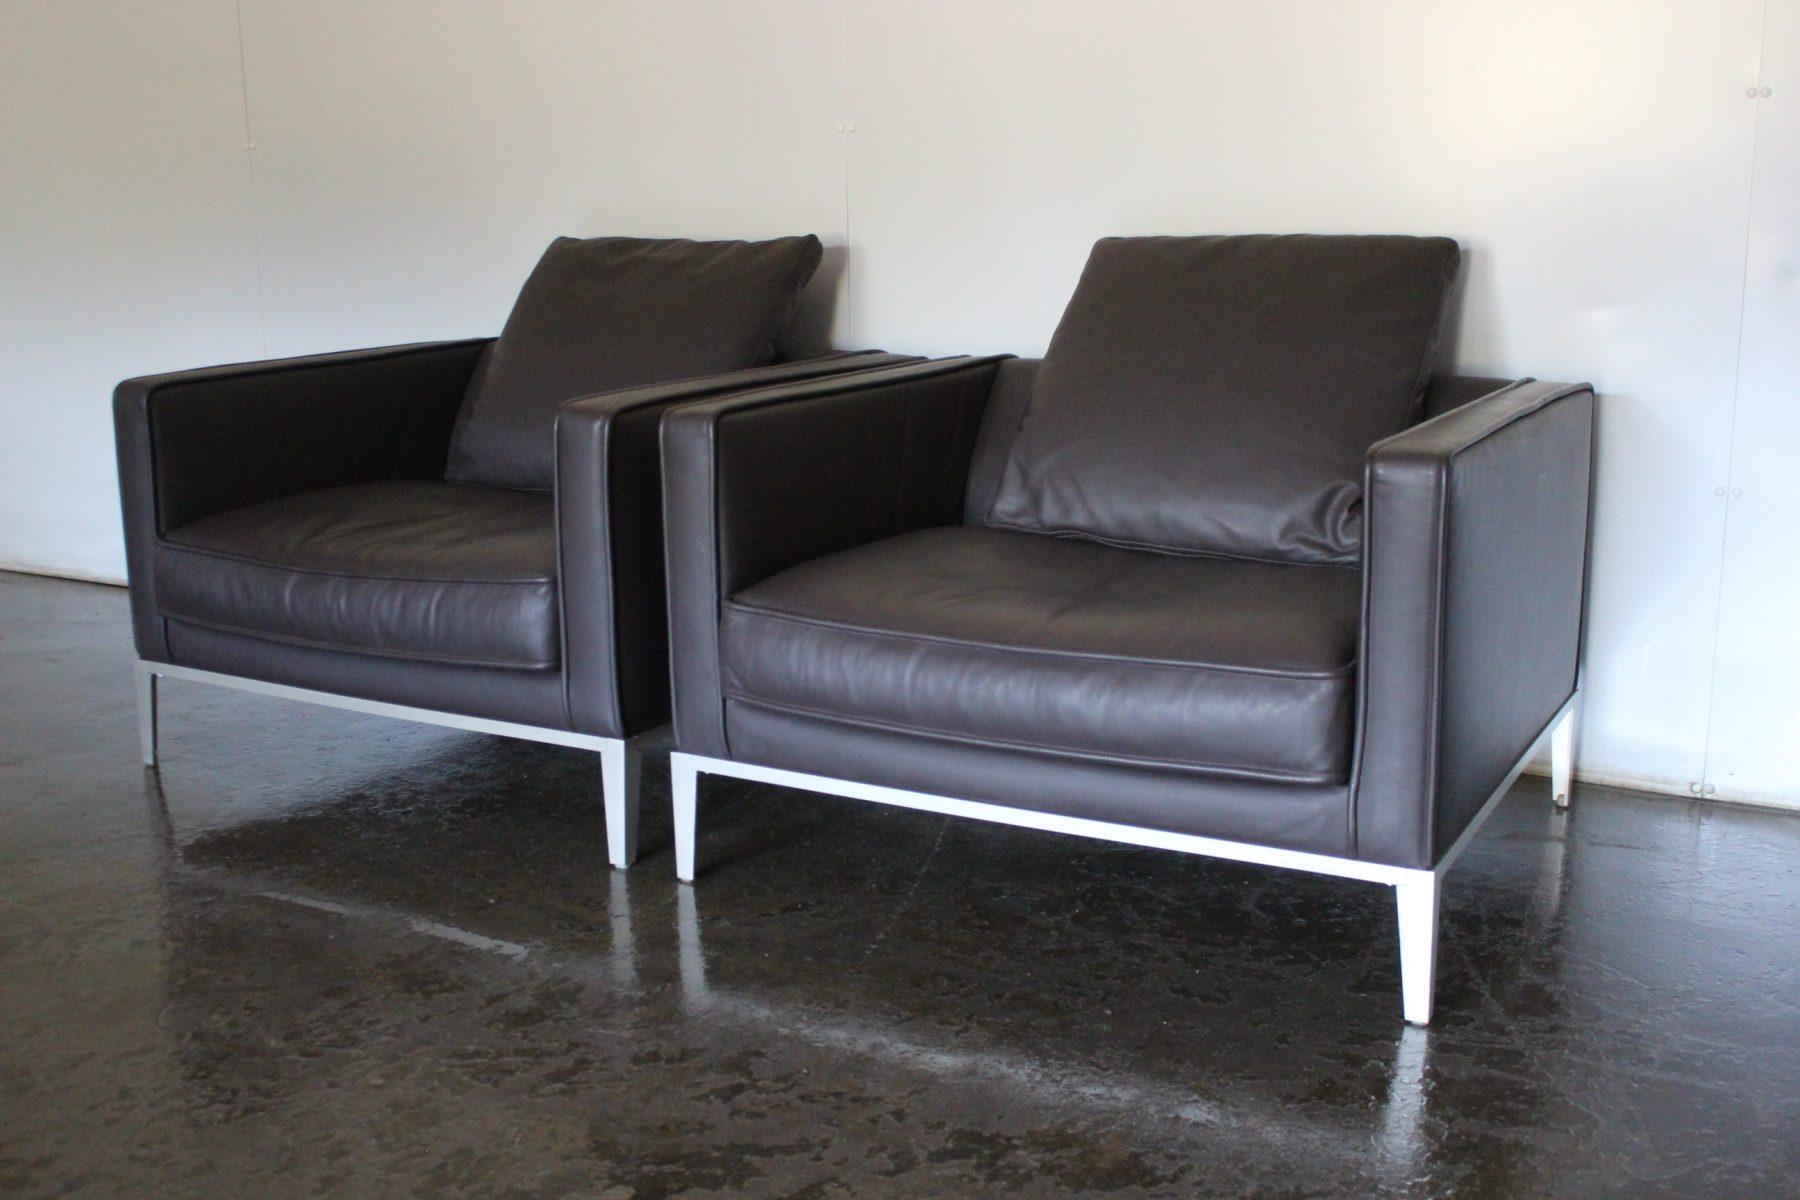 Mint B&B Italia “Simplice” Large Armchair in “Gamma” Dark-Brown Leather For Sale 1